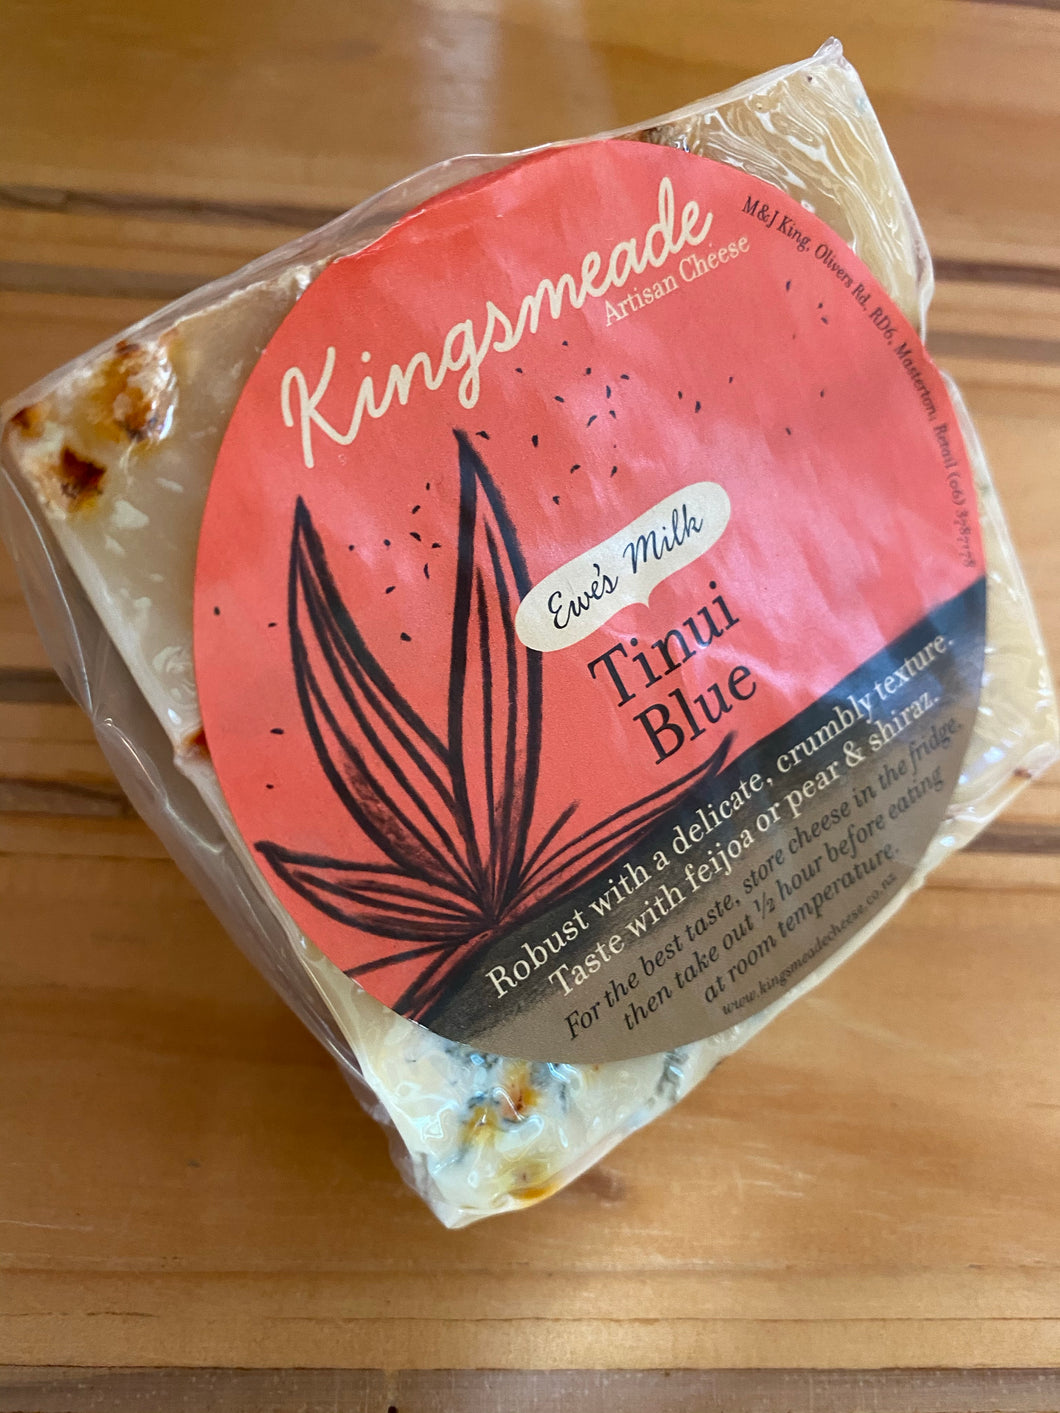 Kingsmeade Artisan Cheese